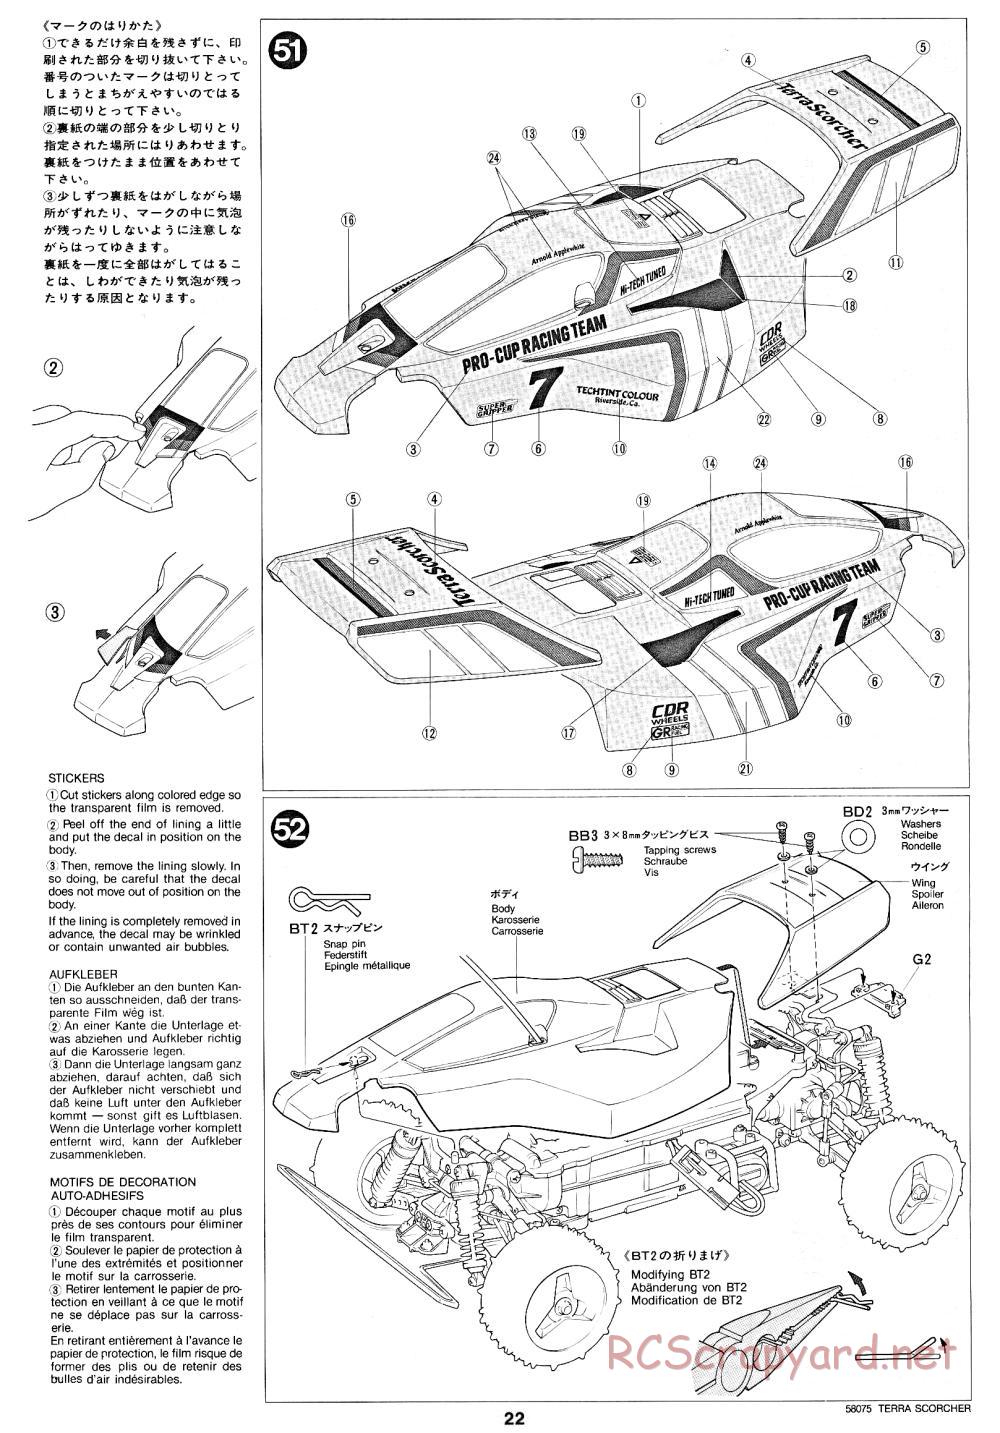 Tamiya - Terra Scorcher - 58075 - Manual - Page 22